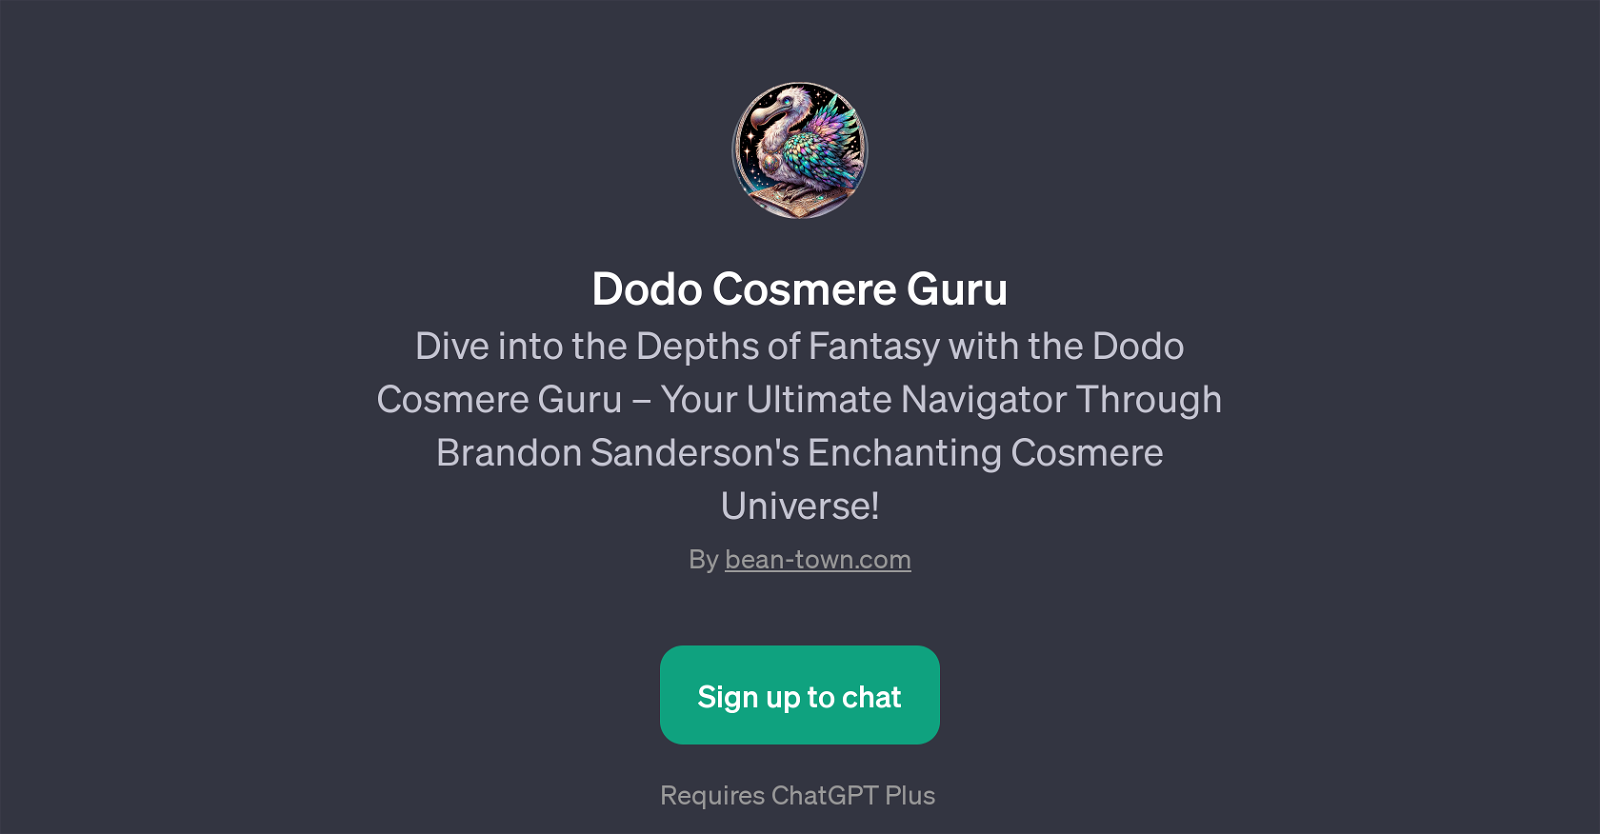 Dodo Cosmere Guru website